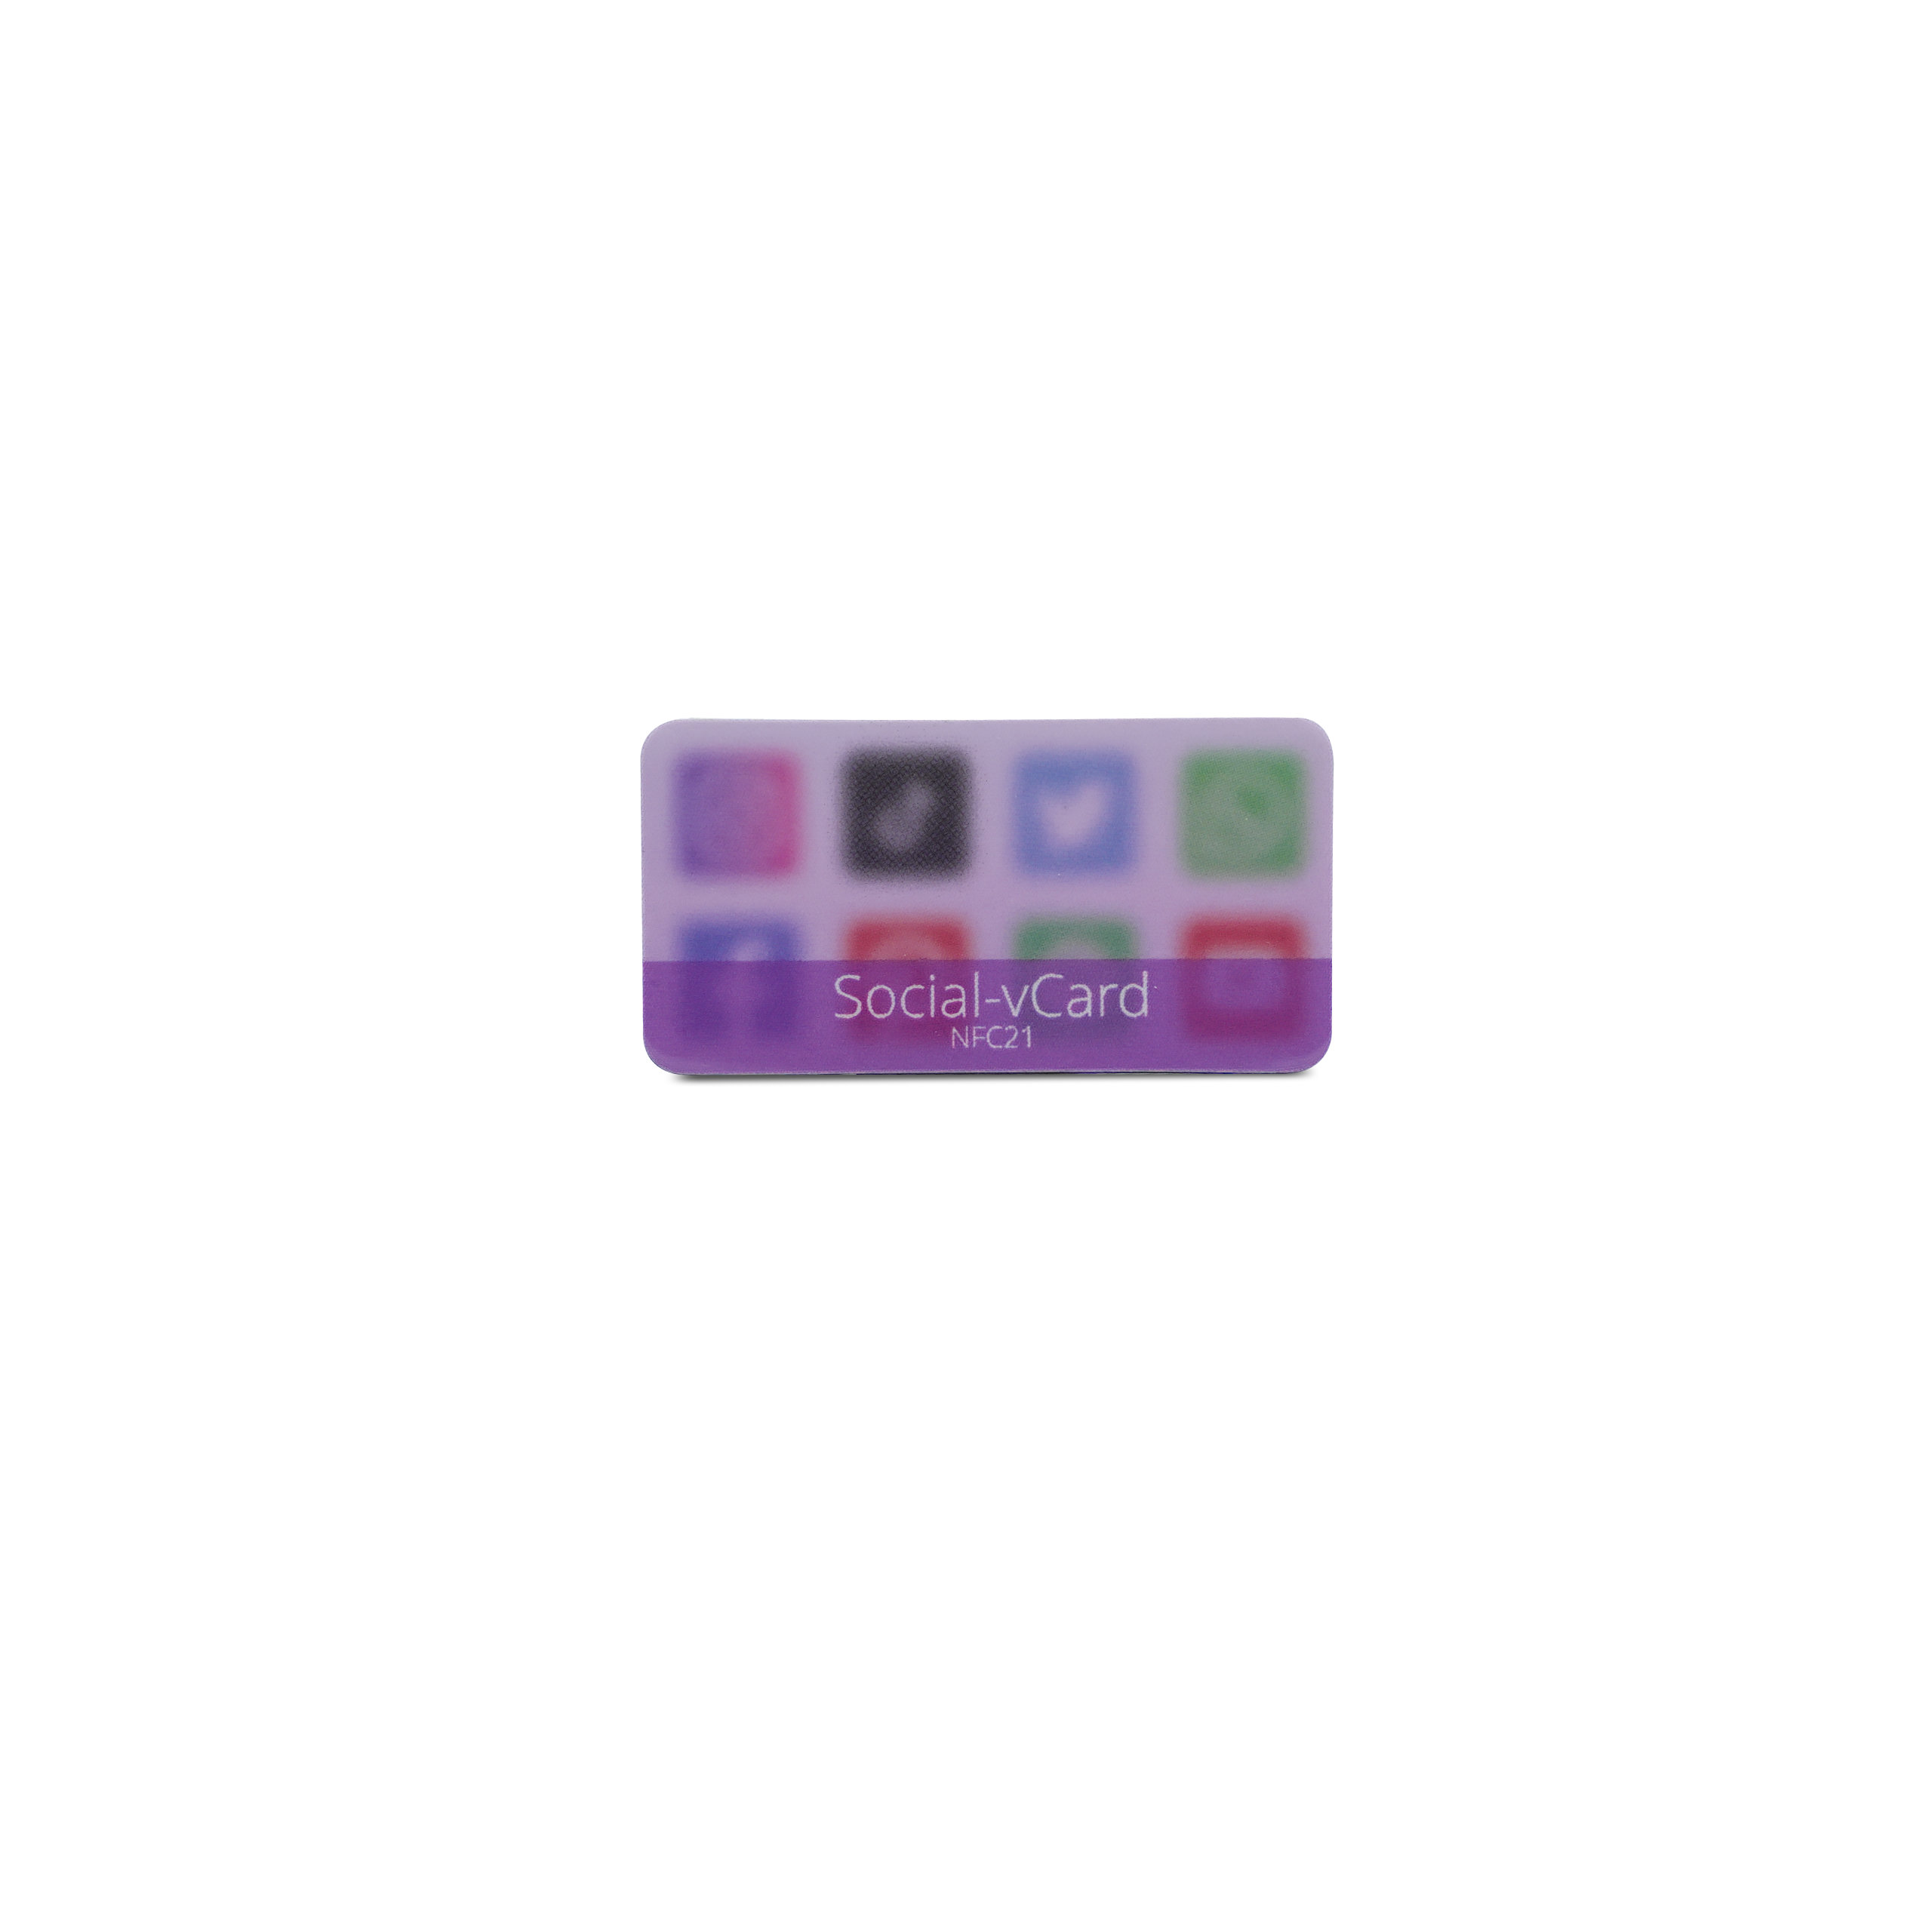 Social-vCard Glow - Digitaler Social Media Sticker - PET - 35 x 18 mm - pink